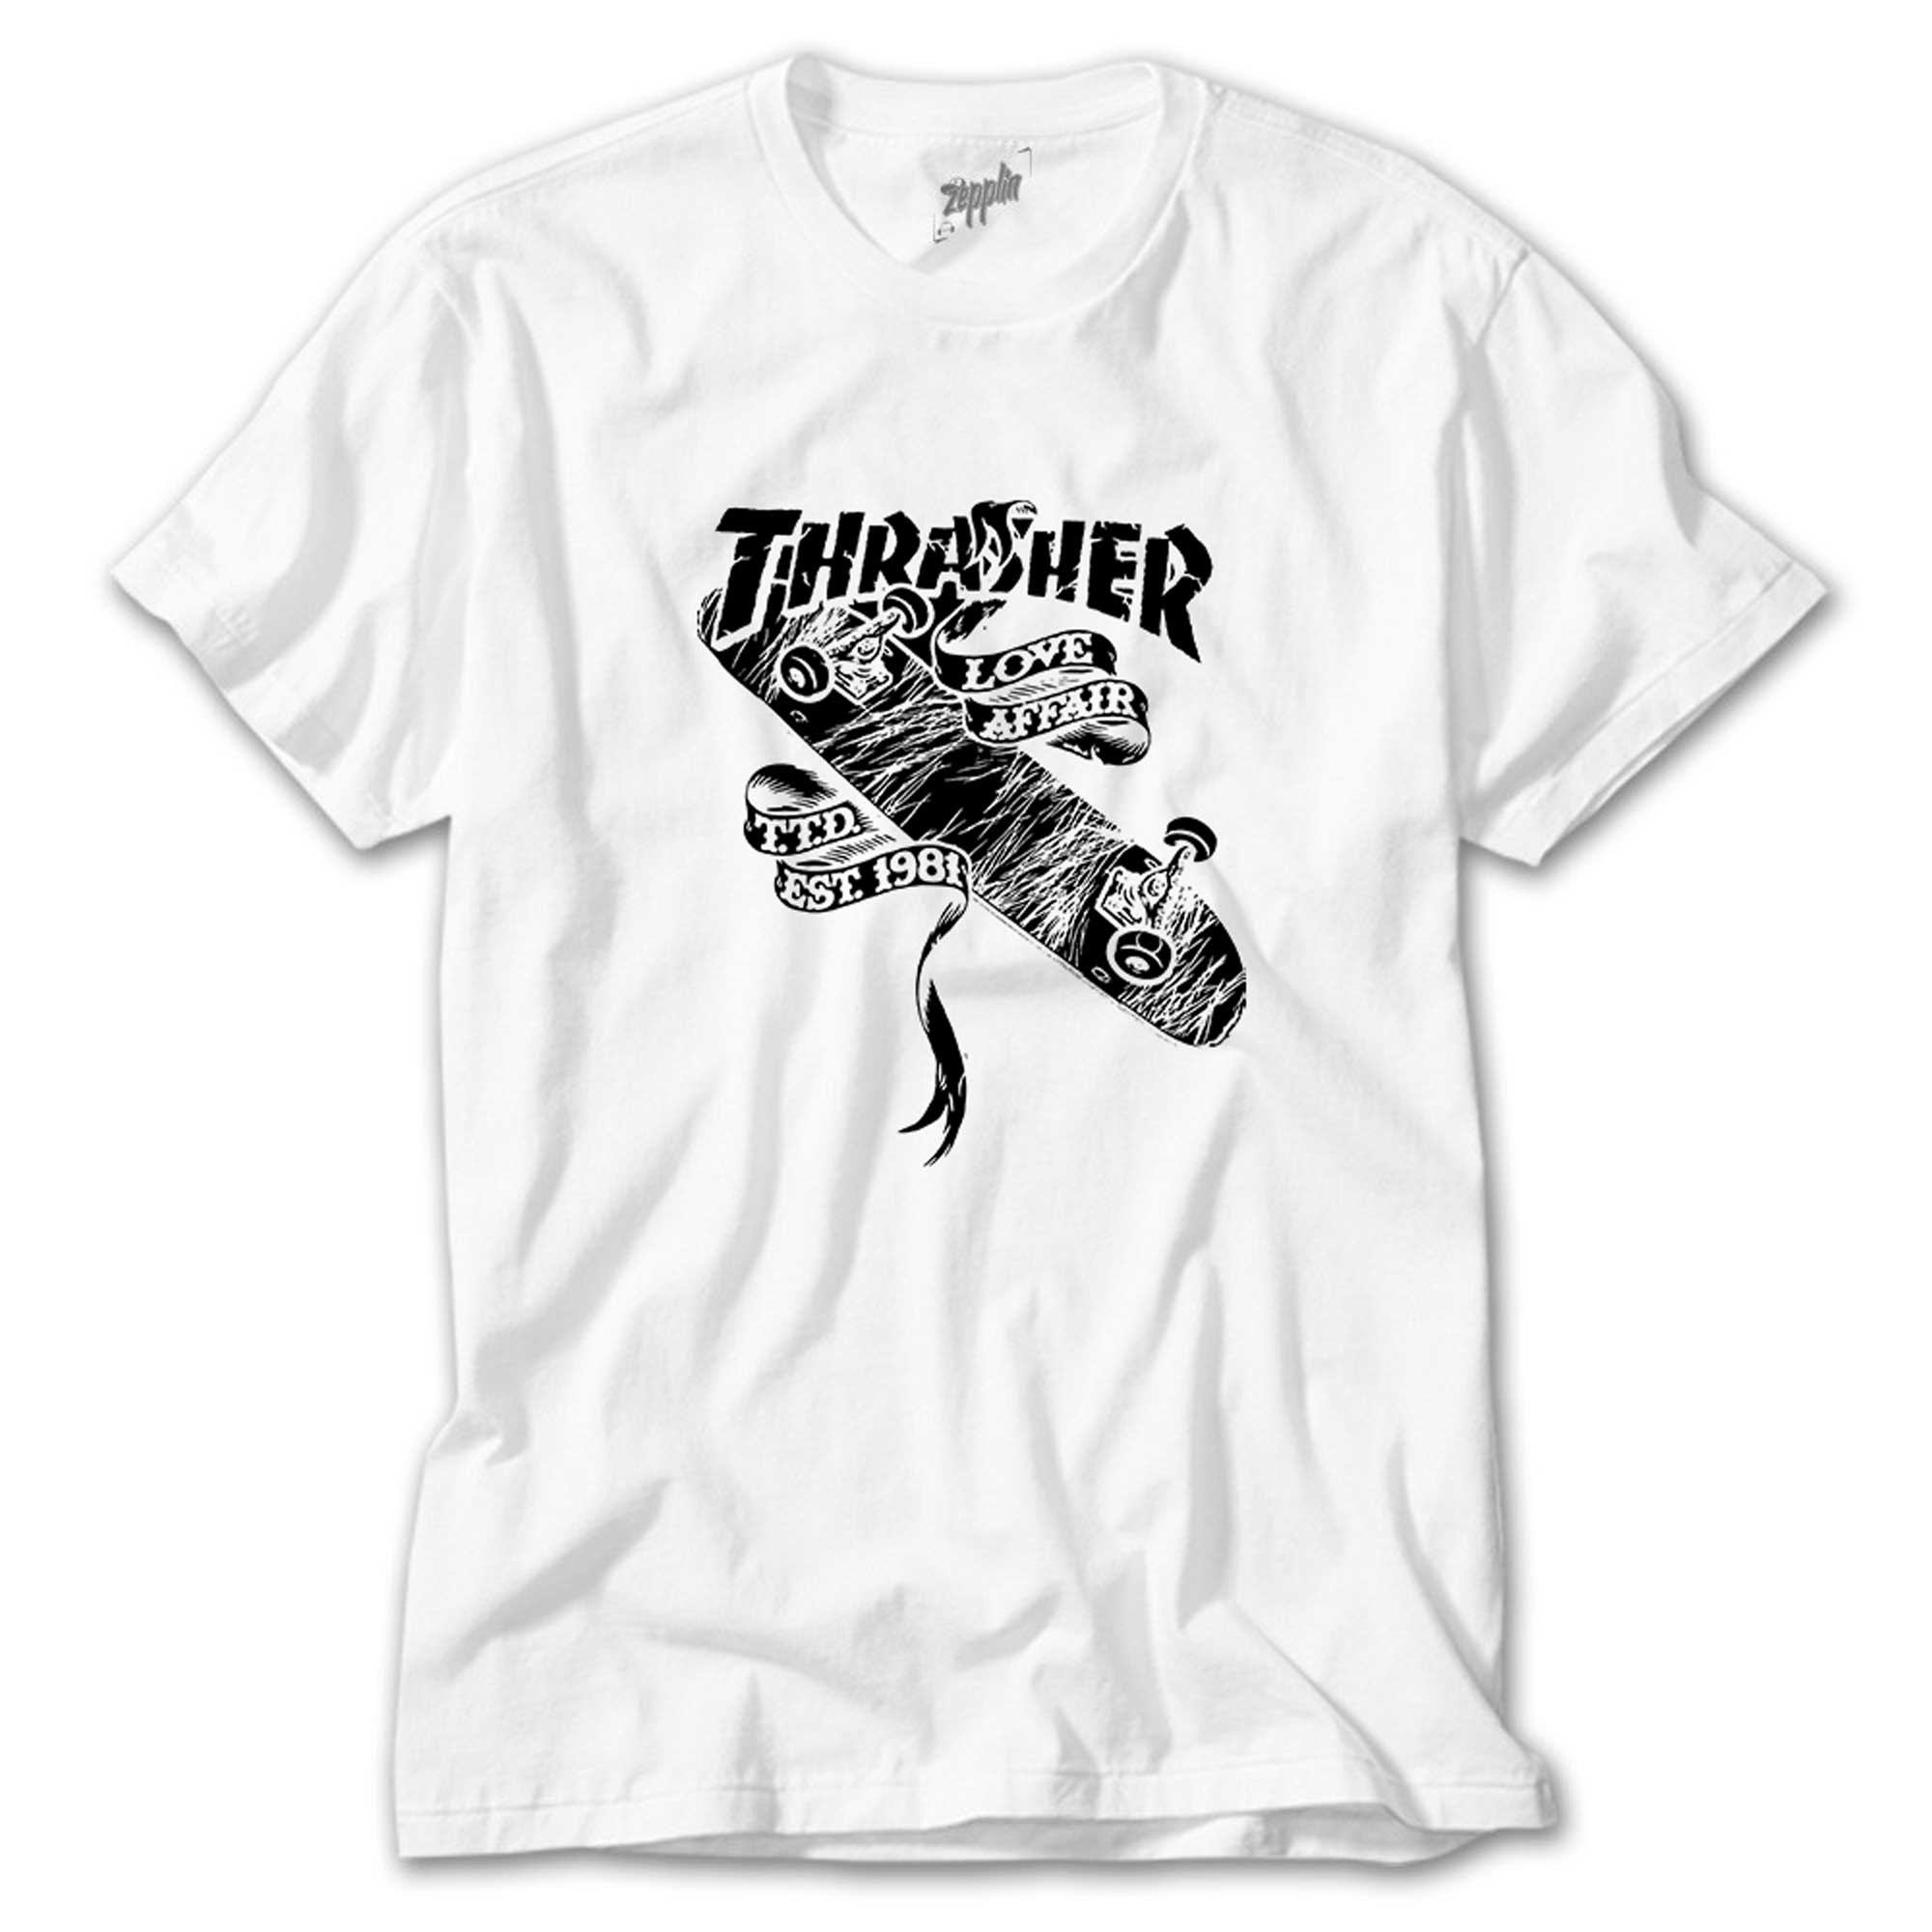 Thrasher Love Affair Beyaz Tişört